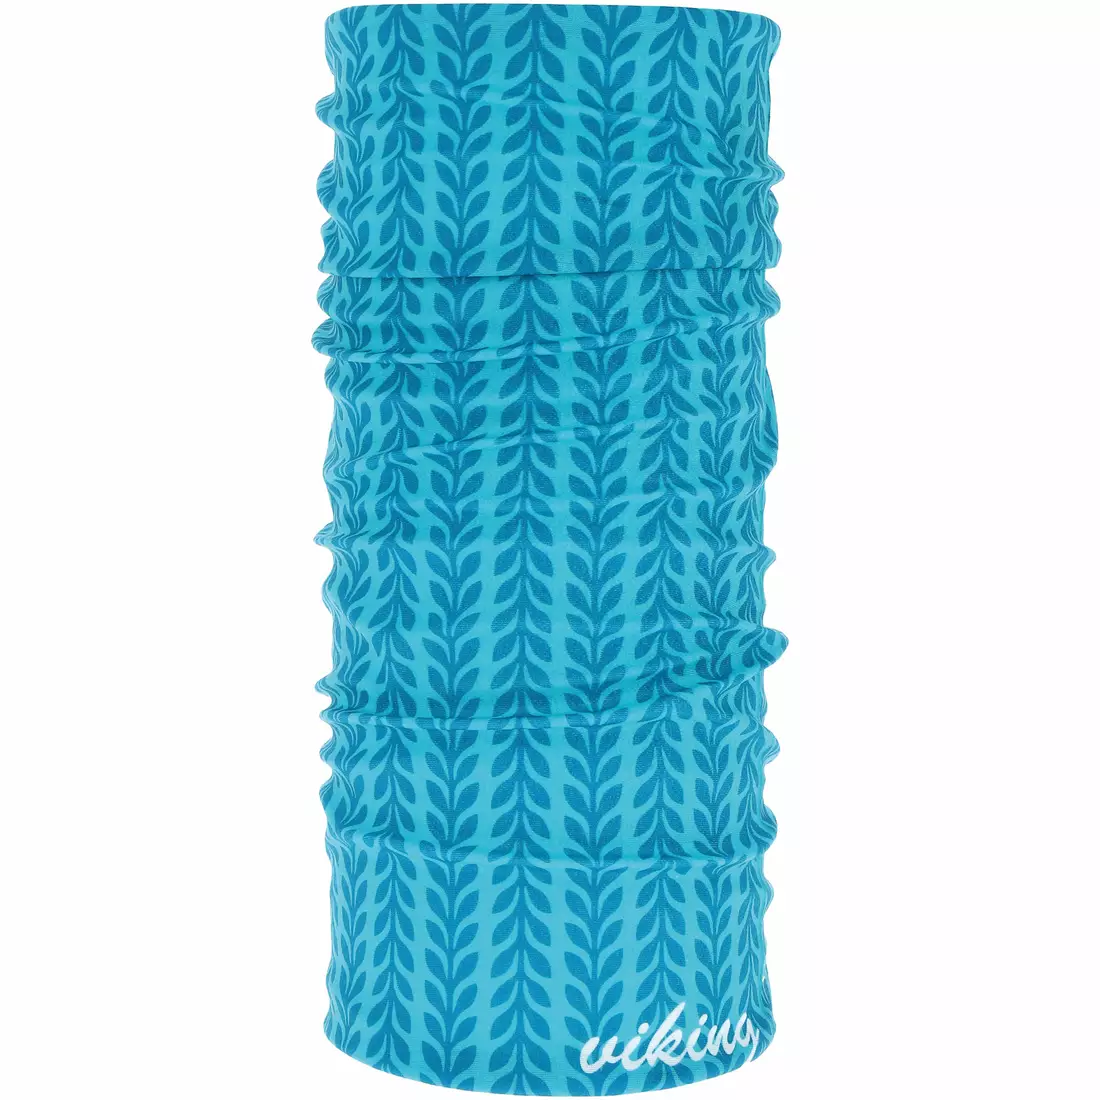 VIKING multifunctional bandana 7764 REGULAR blue 410/23/7764/70